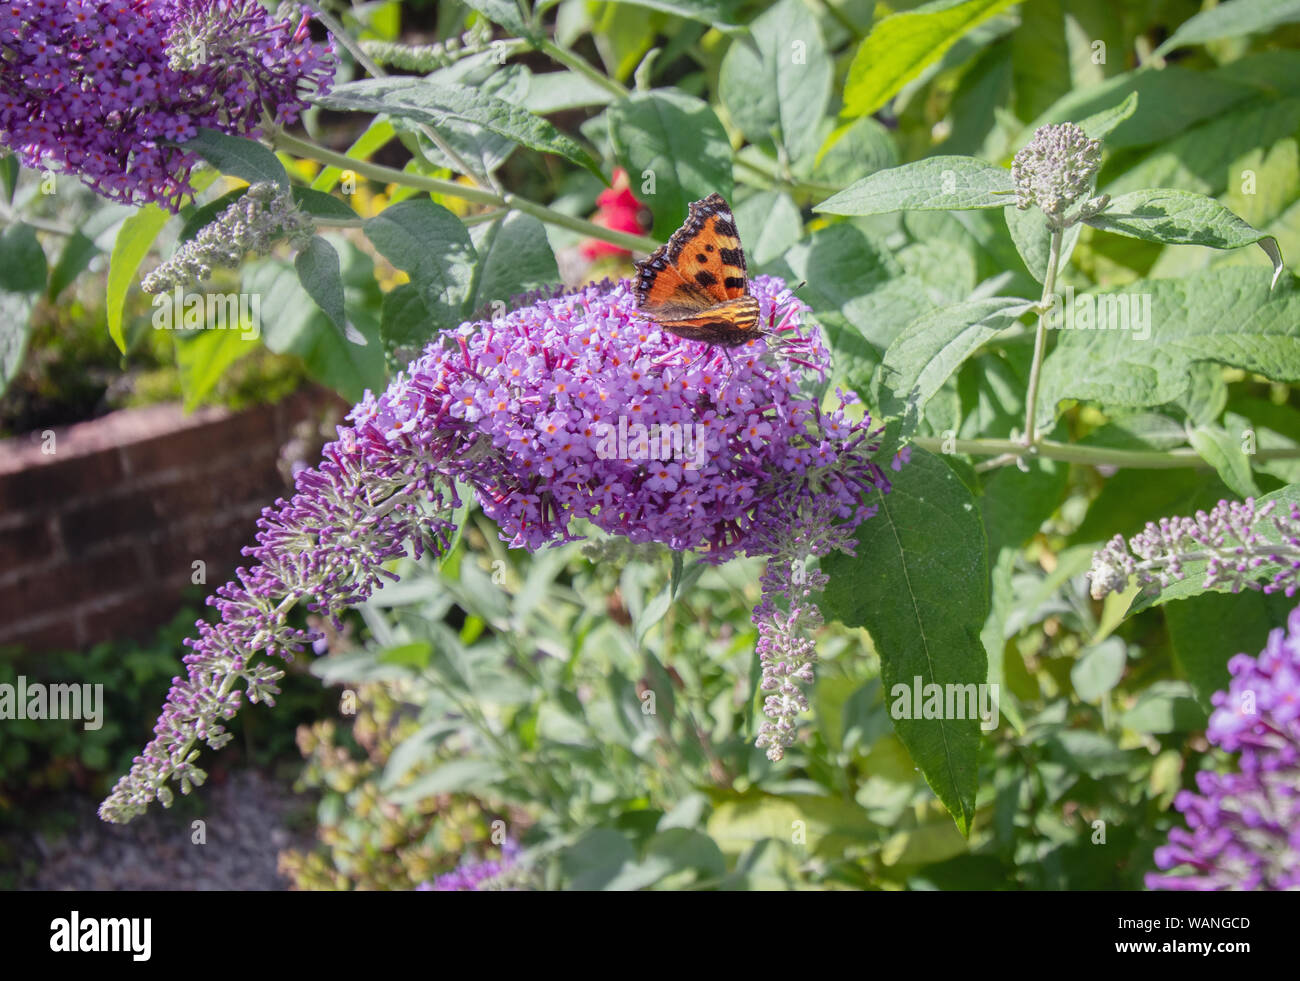 Tortoiseshell butterfly (Aglais urticae) feeding on nectar from purple buddleia flowers Stock Photo